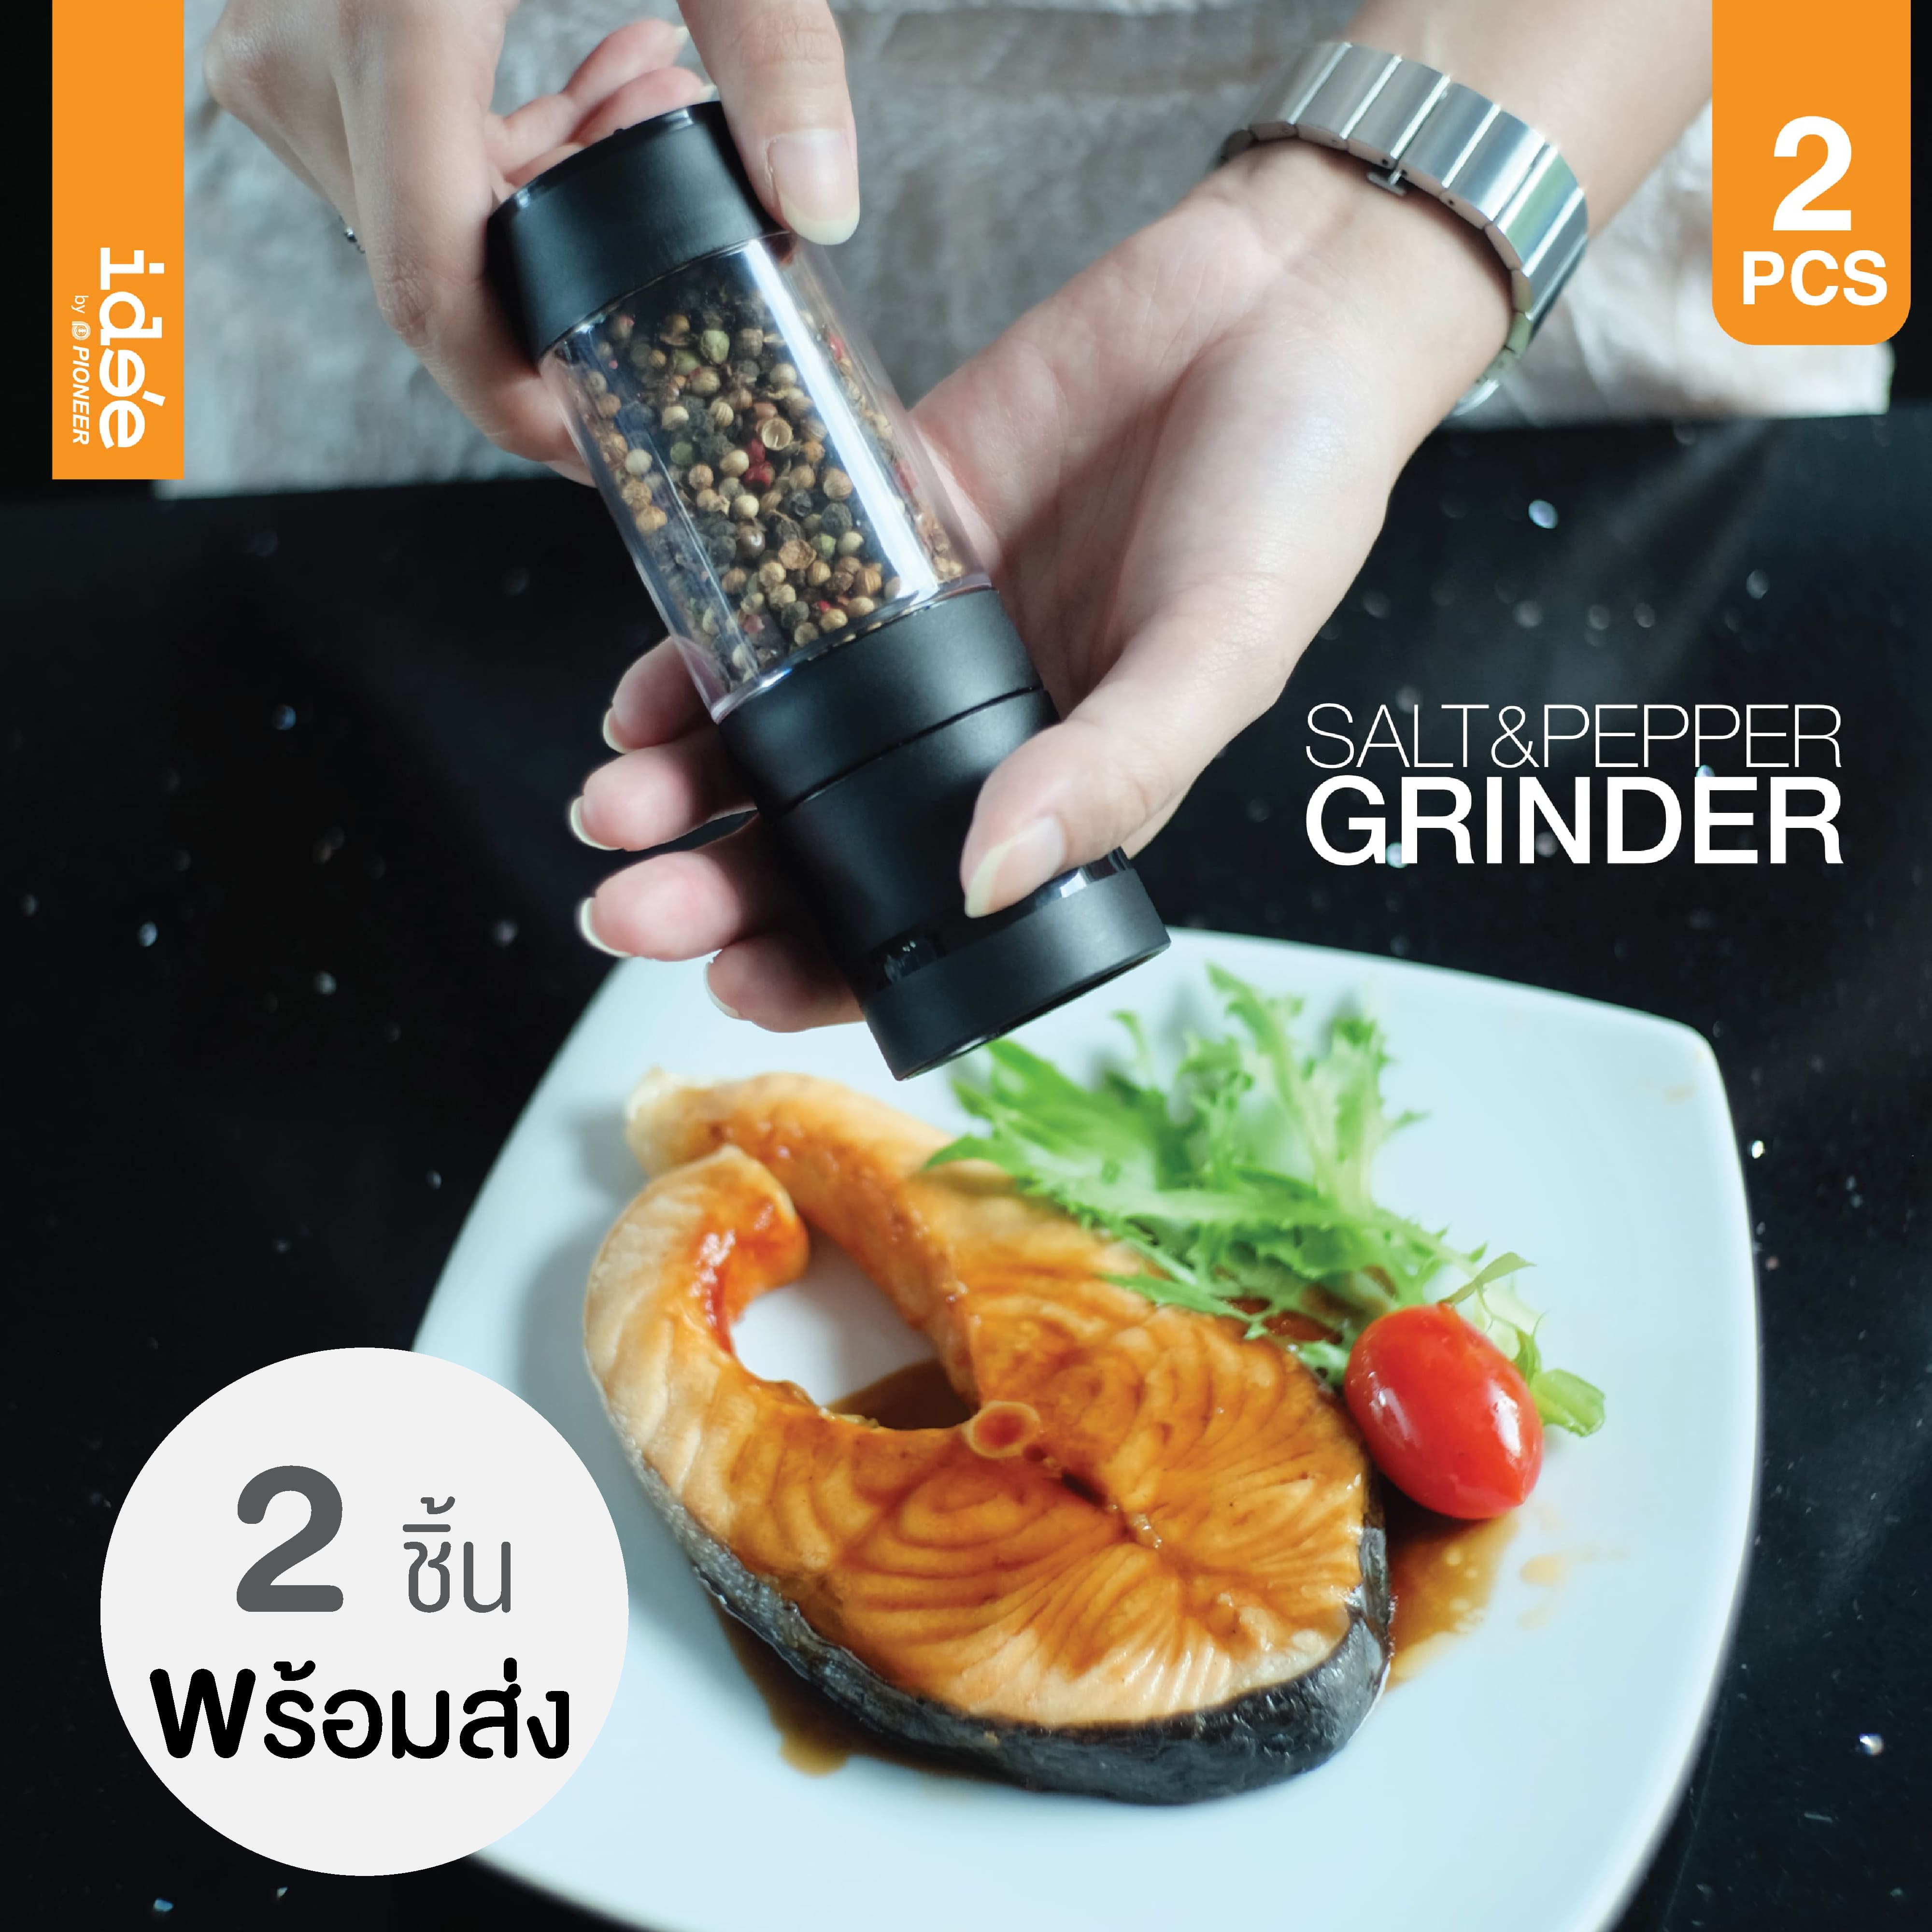 ide'e NEW PRODUCT Salt & Pepper Grinder เซทขวดเกลือและขวดบดพริกไทย ชุดเซทสุดคุ้มสำหรับเก็บเกลือและบดพริกไทย ใช้งานง่าย เหมาะสำหรับทุกครัวเรือน